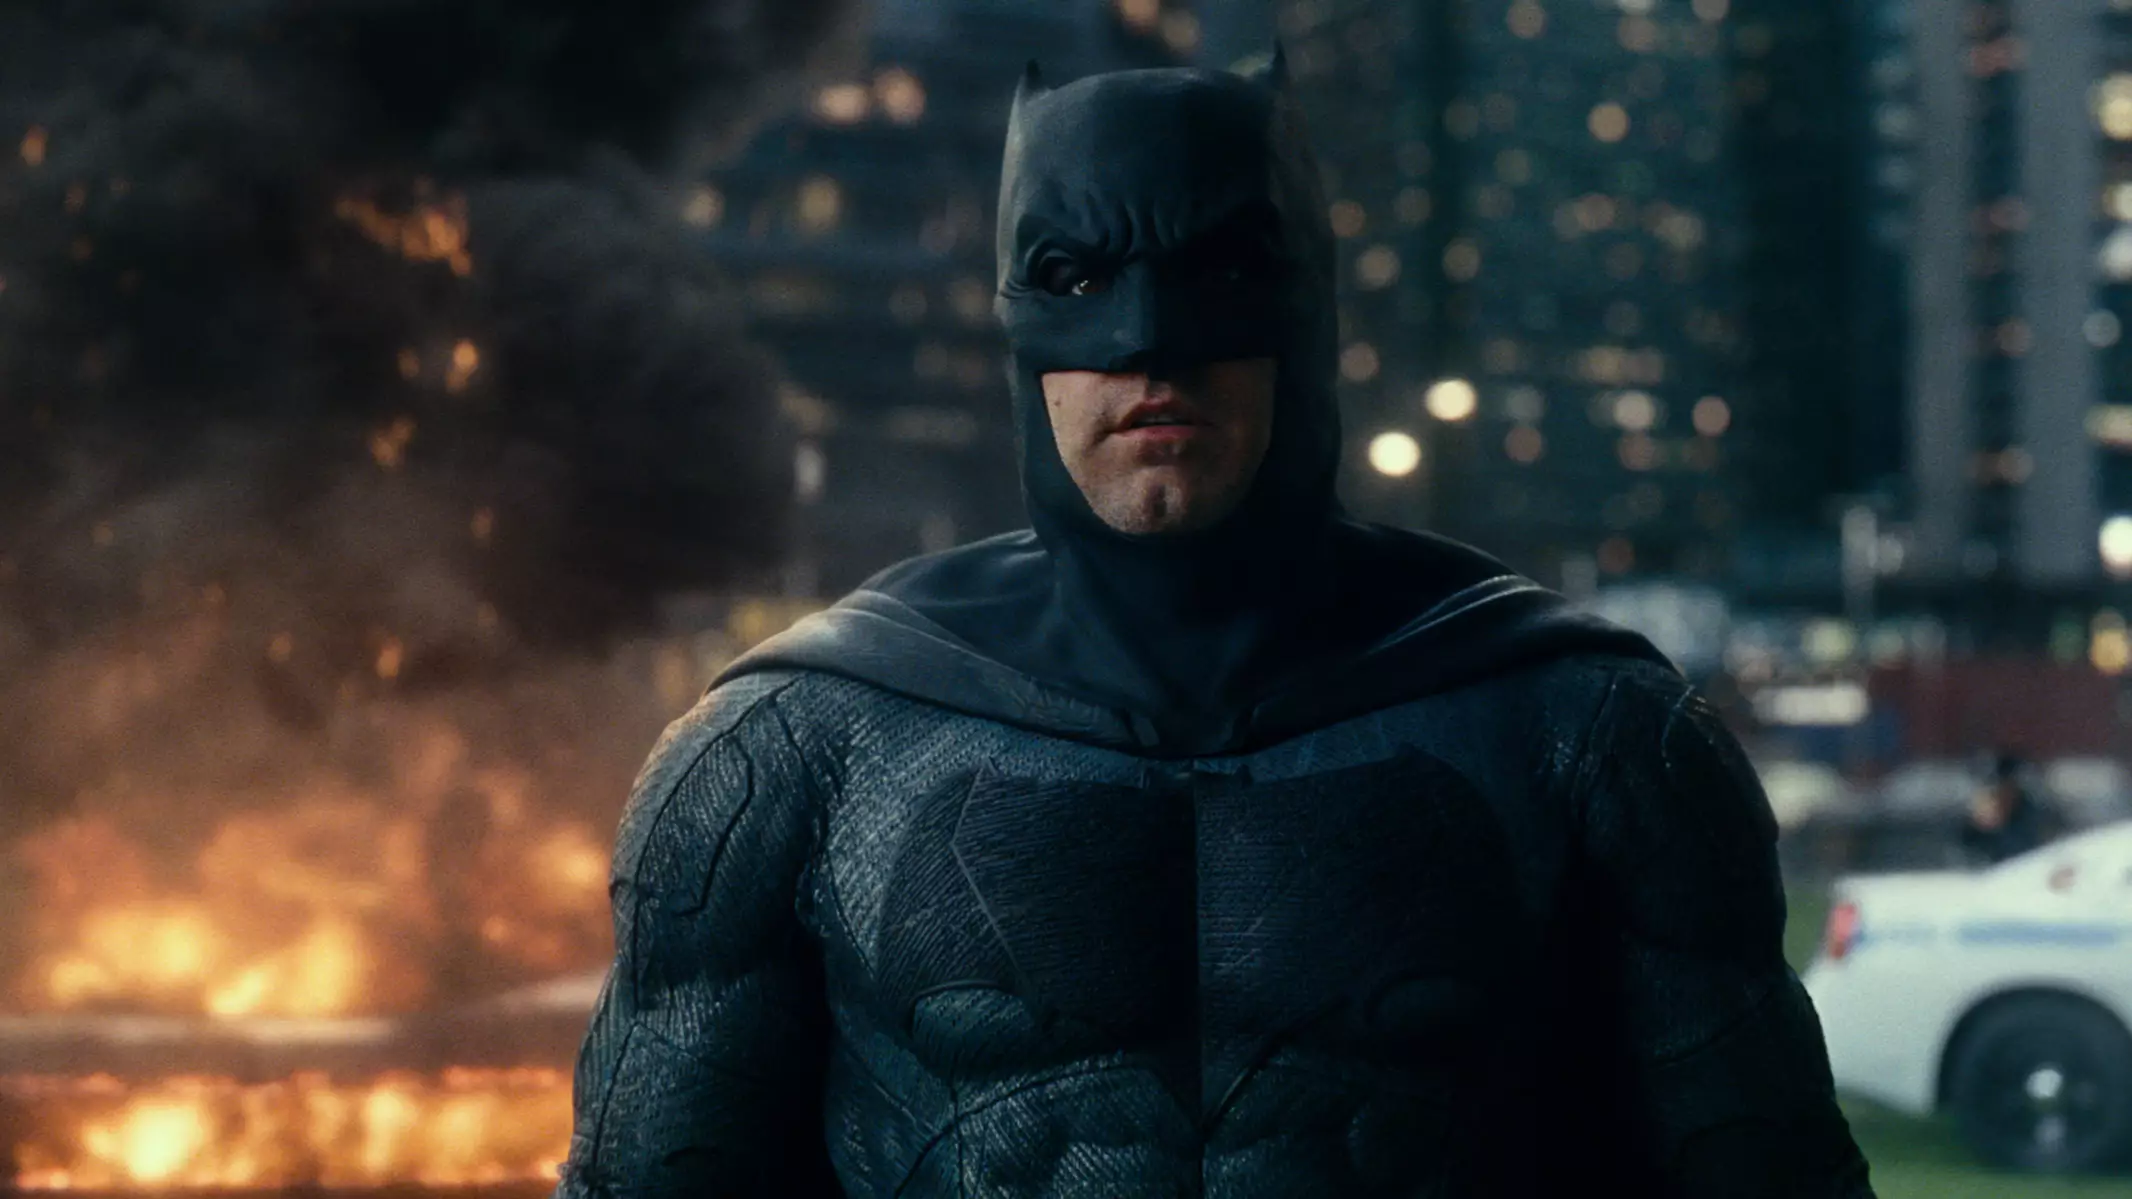 DC Fans Show Their Appreciation For Ben Affleck's Performances As Batman